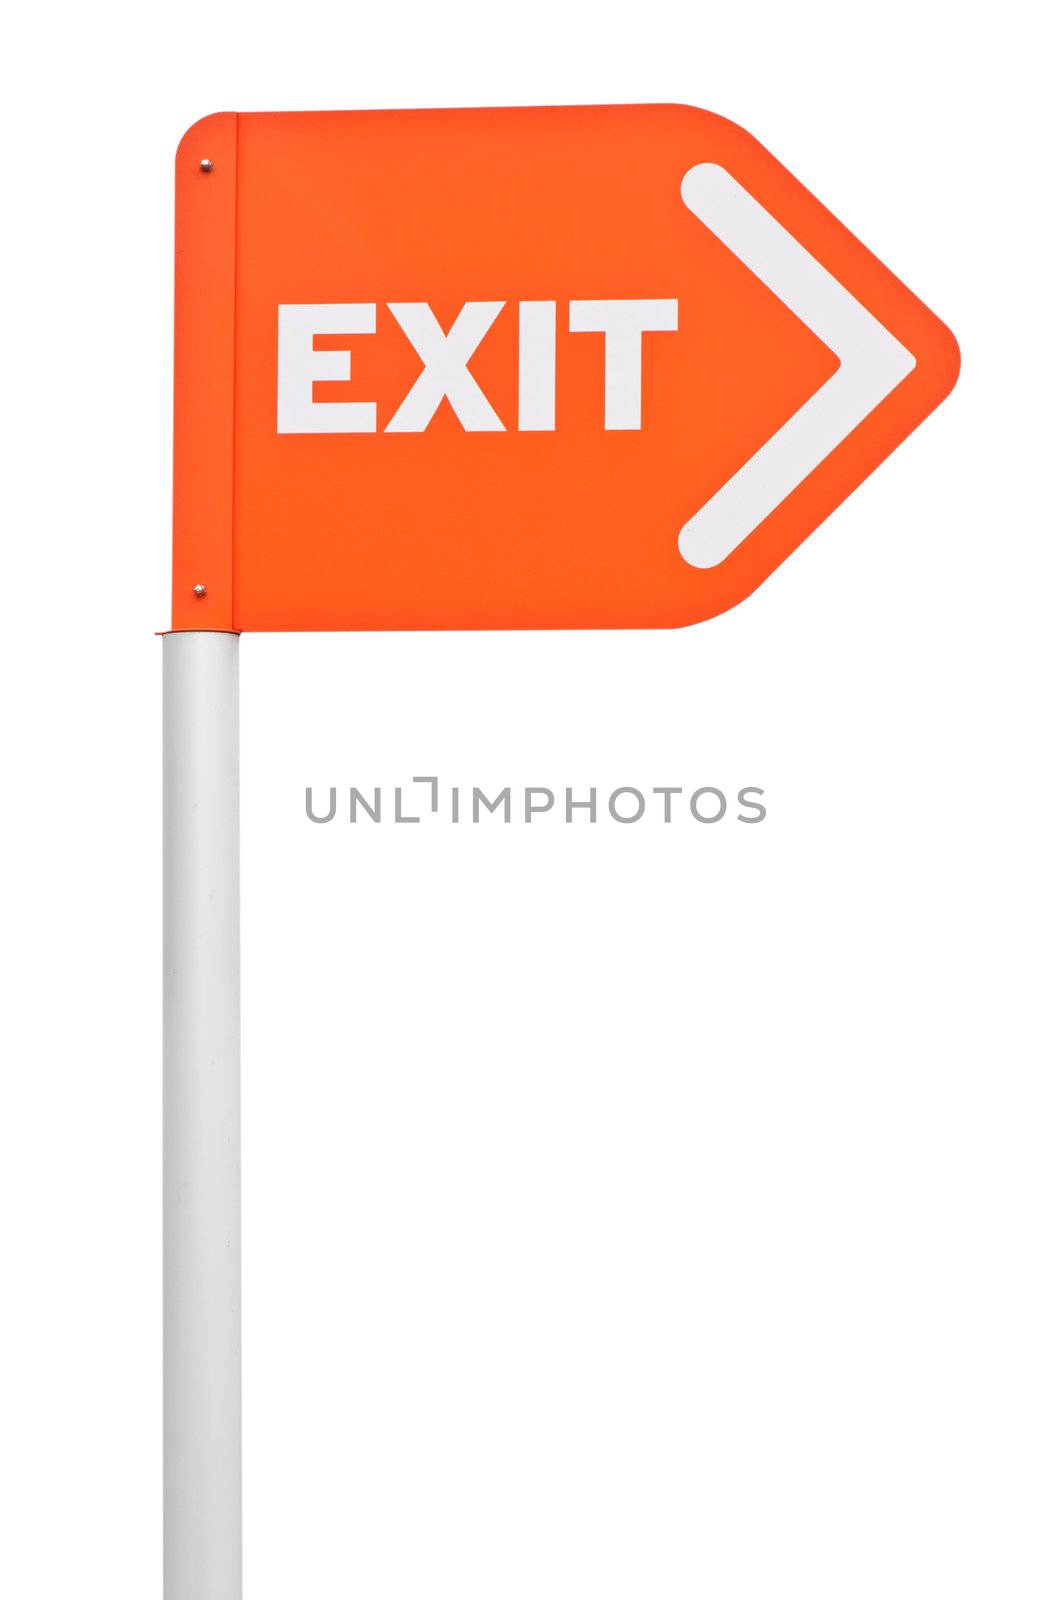 directional orange exit sign on post pole (isolated on white background)